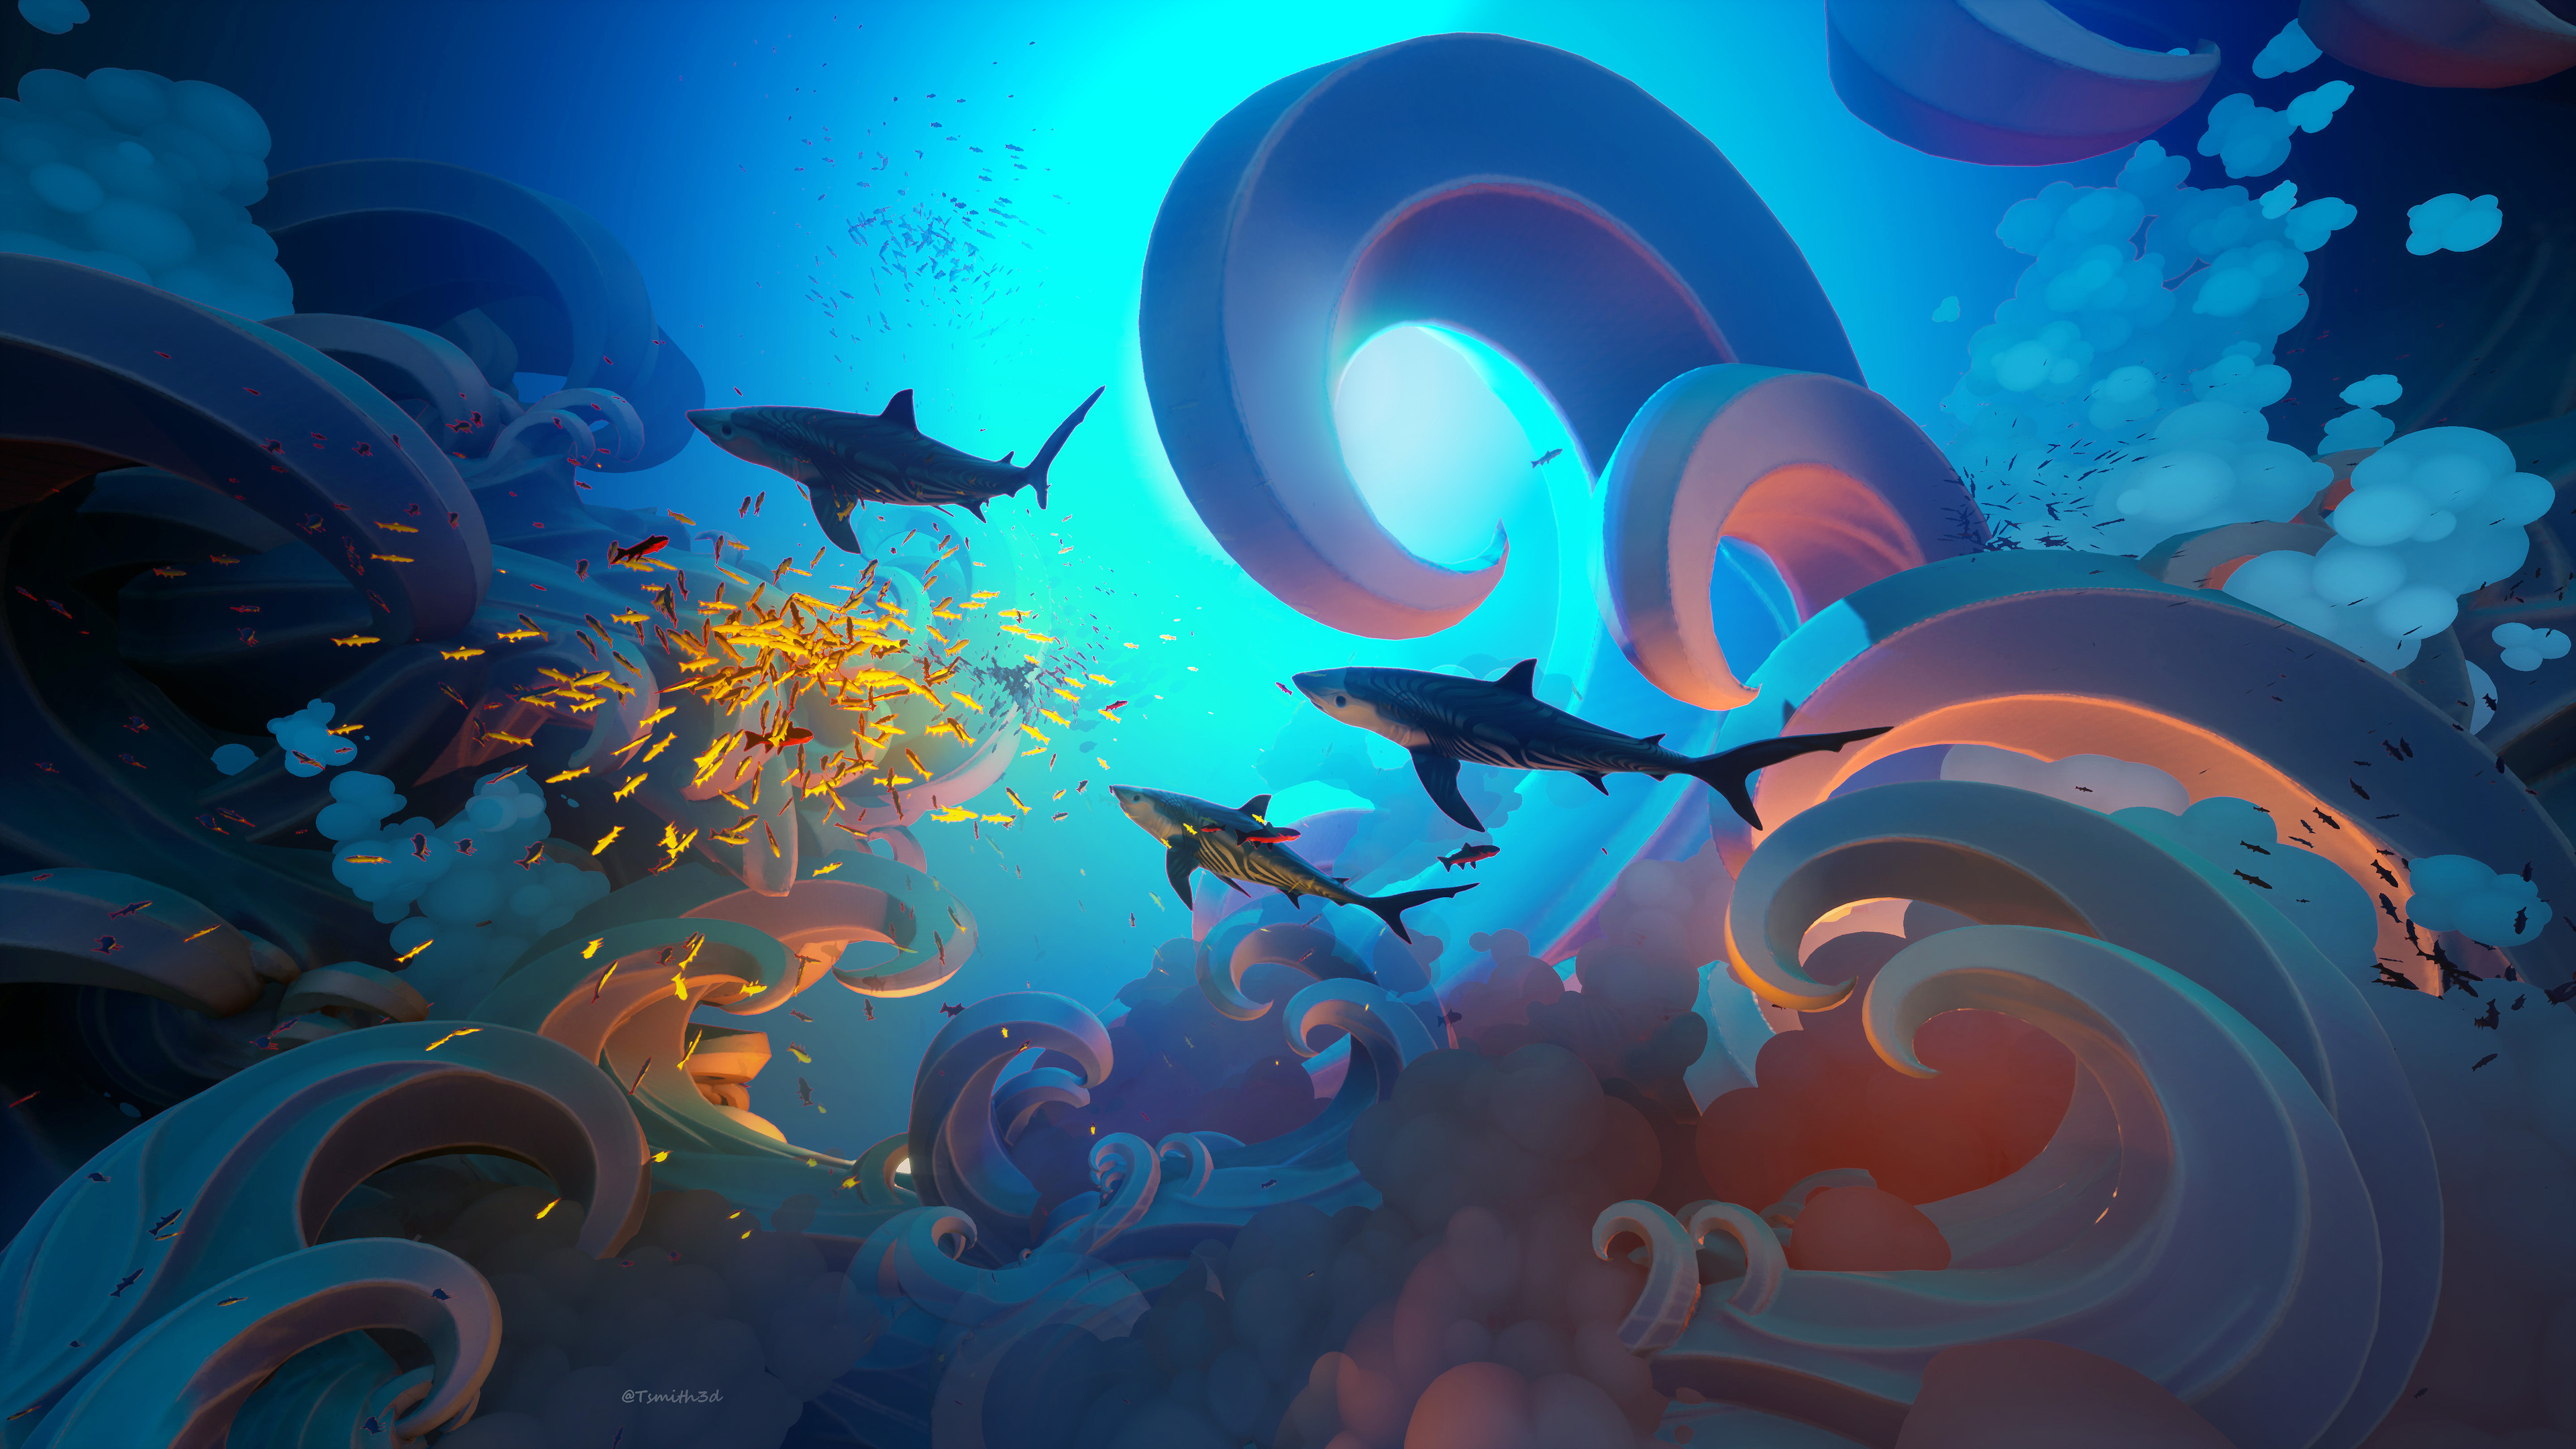 General 3840x2160 Tyler Smith digital art shark fish water underwater digital artwork 4K